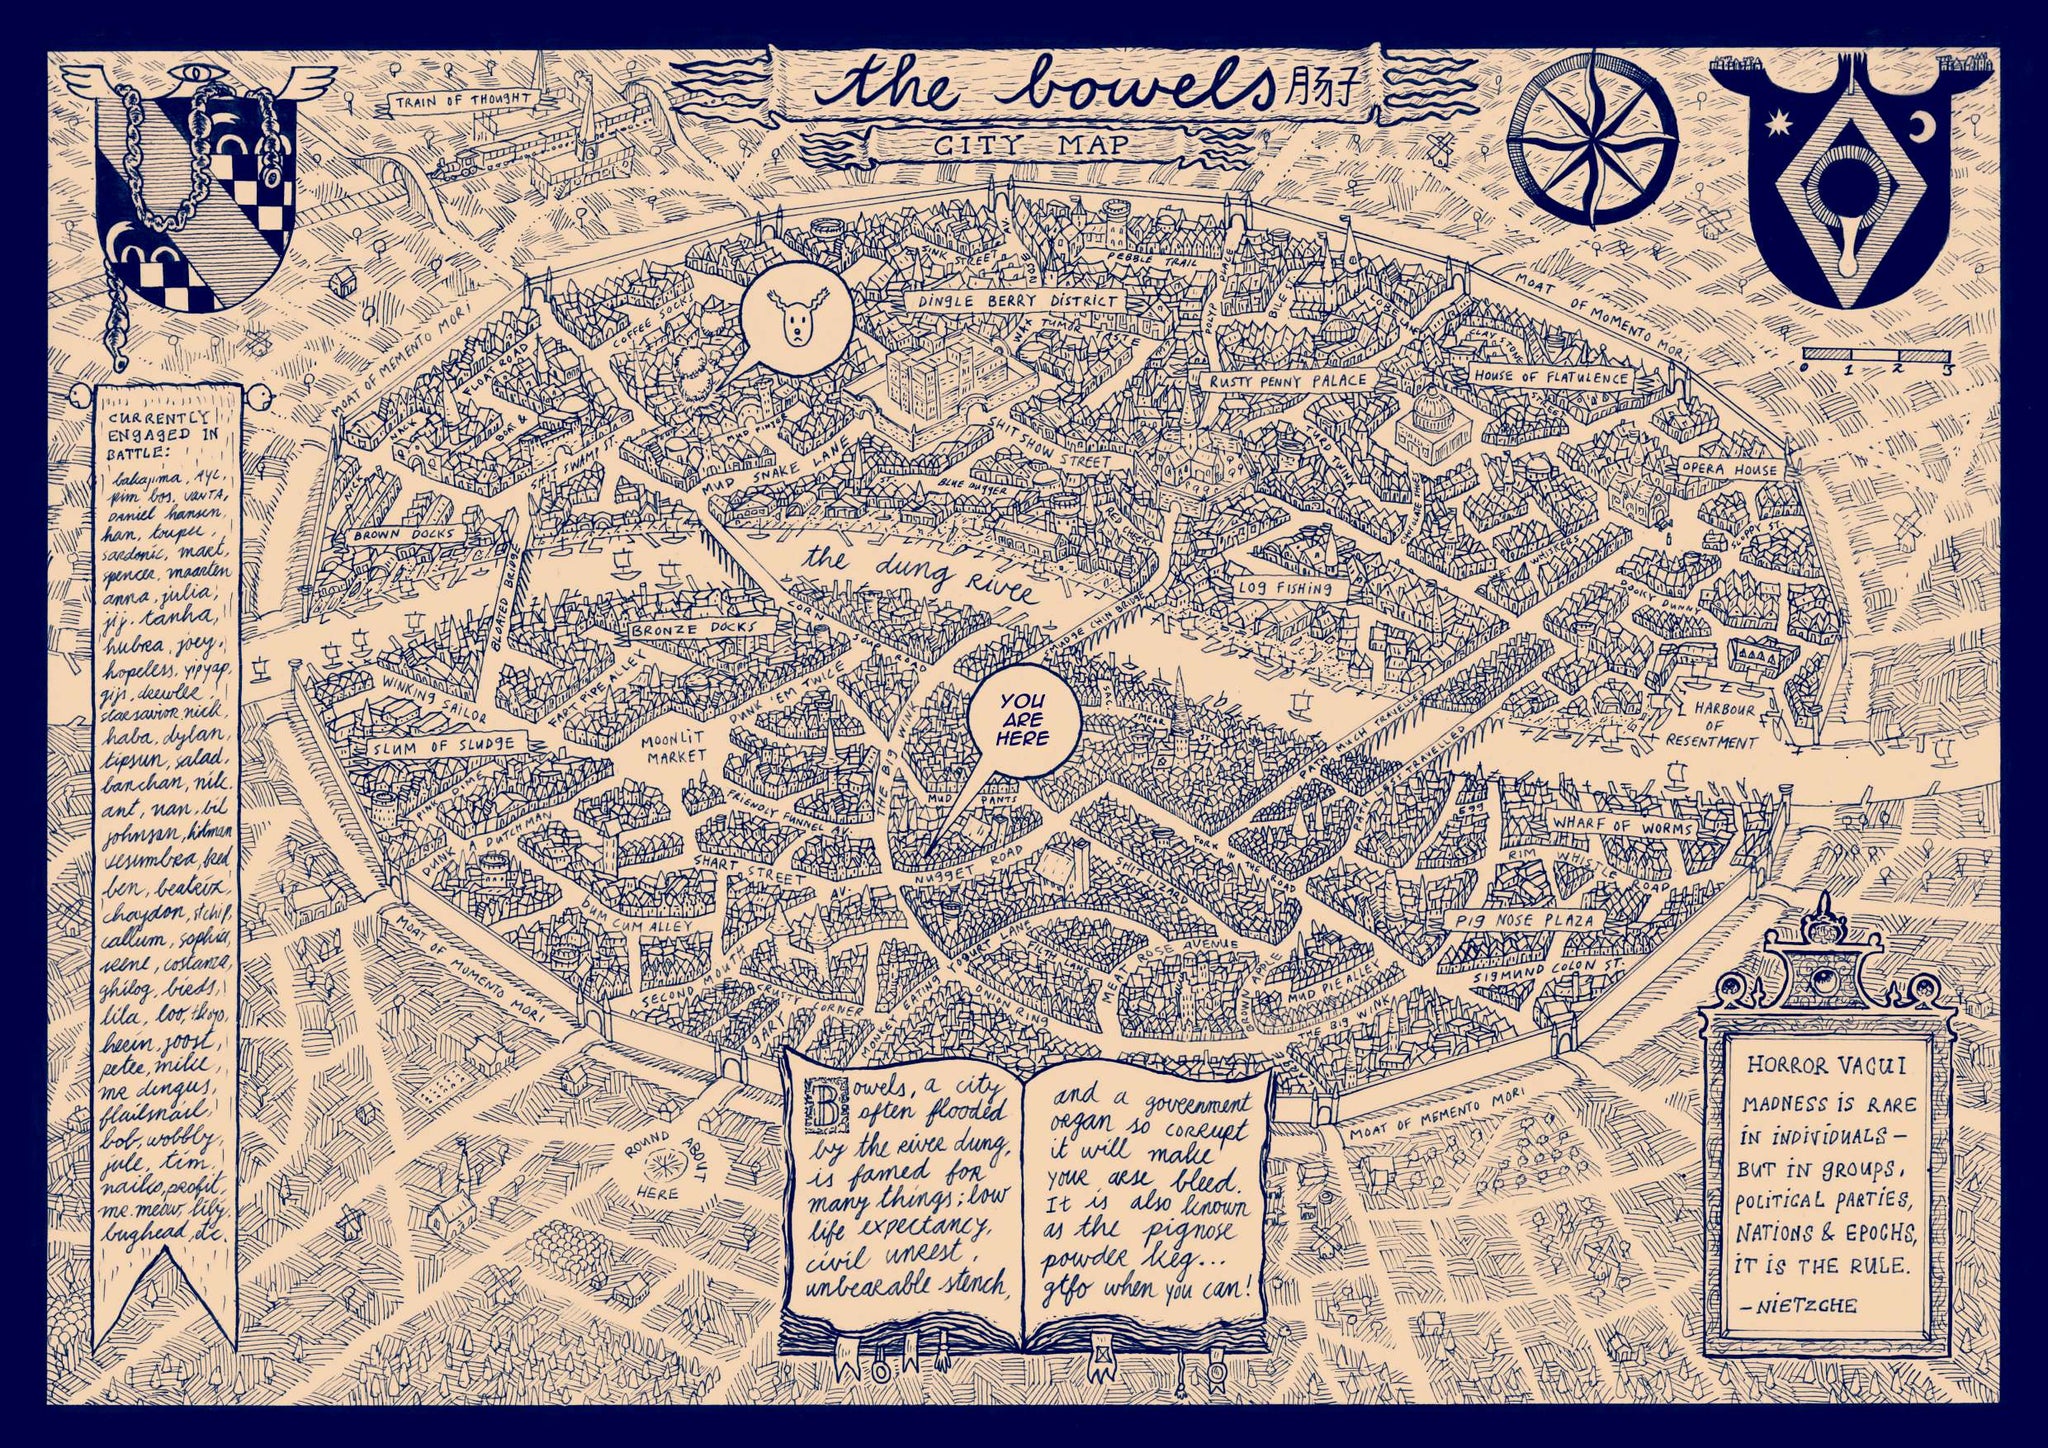 BARK saga the bowels city map